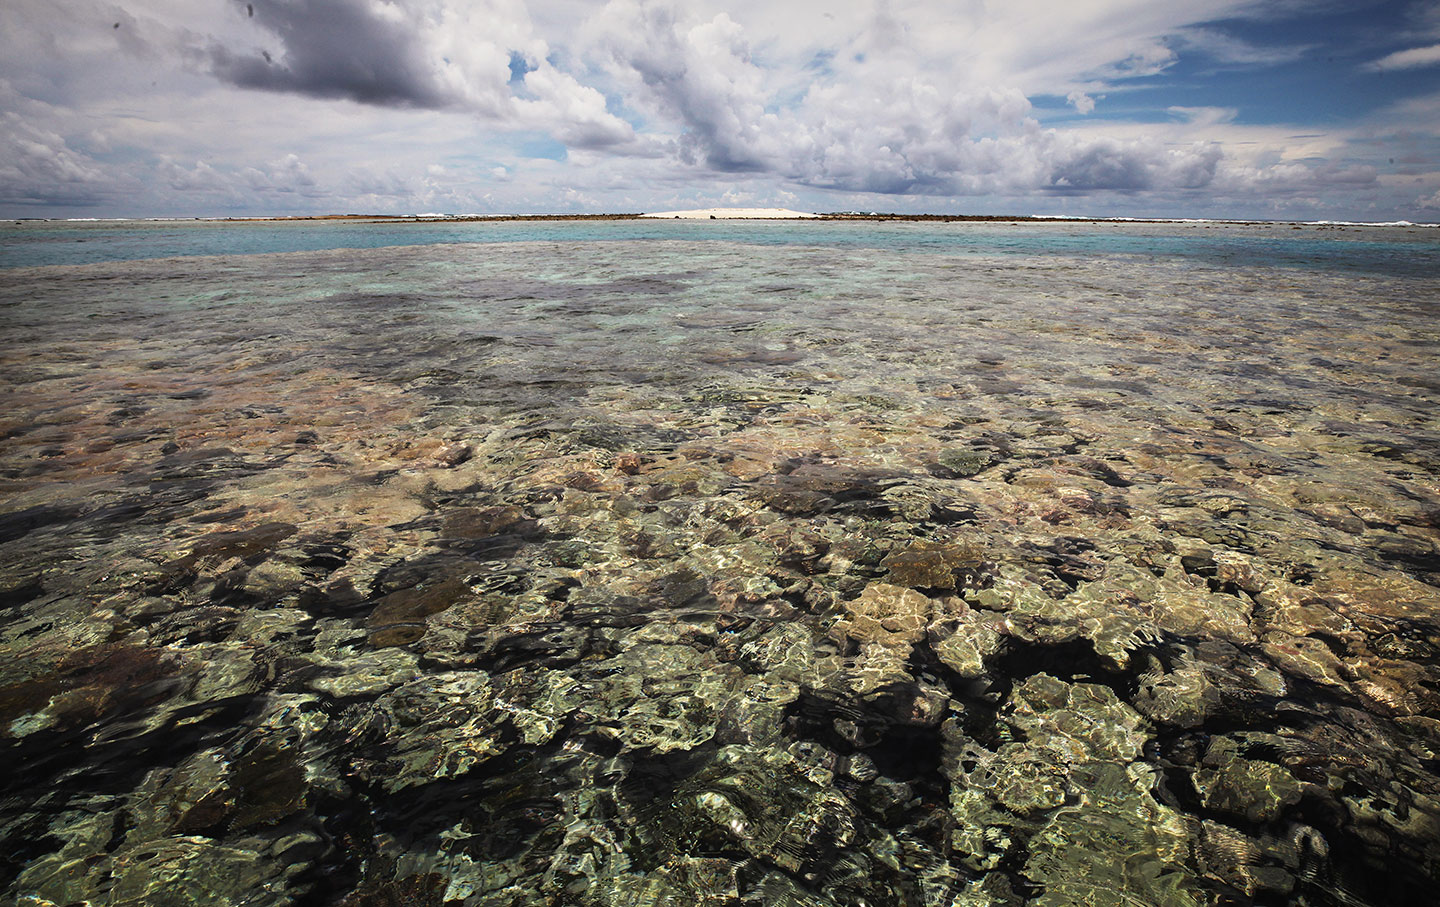 The coast of Tuvalu